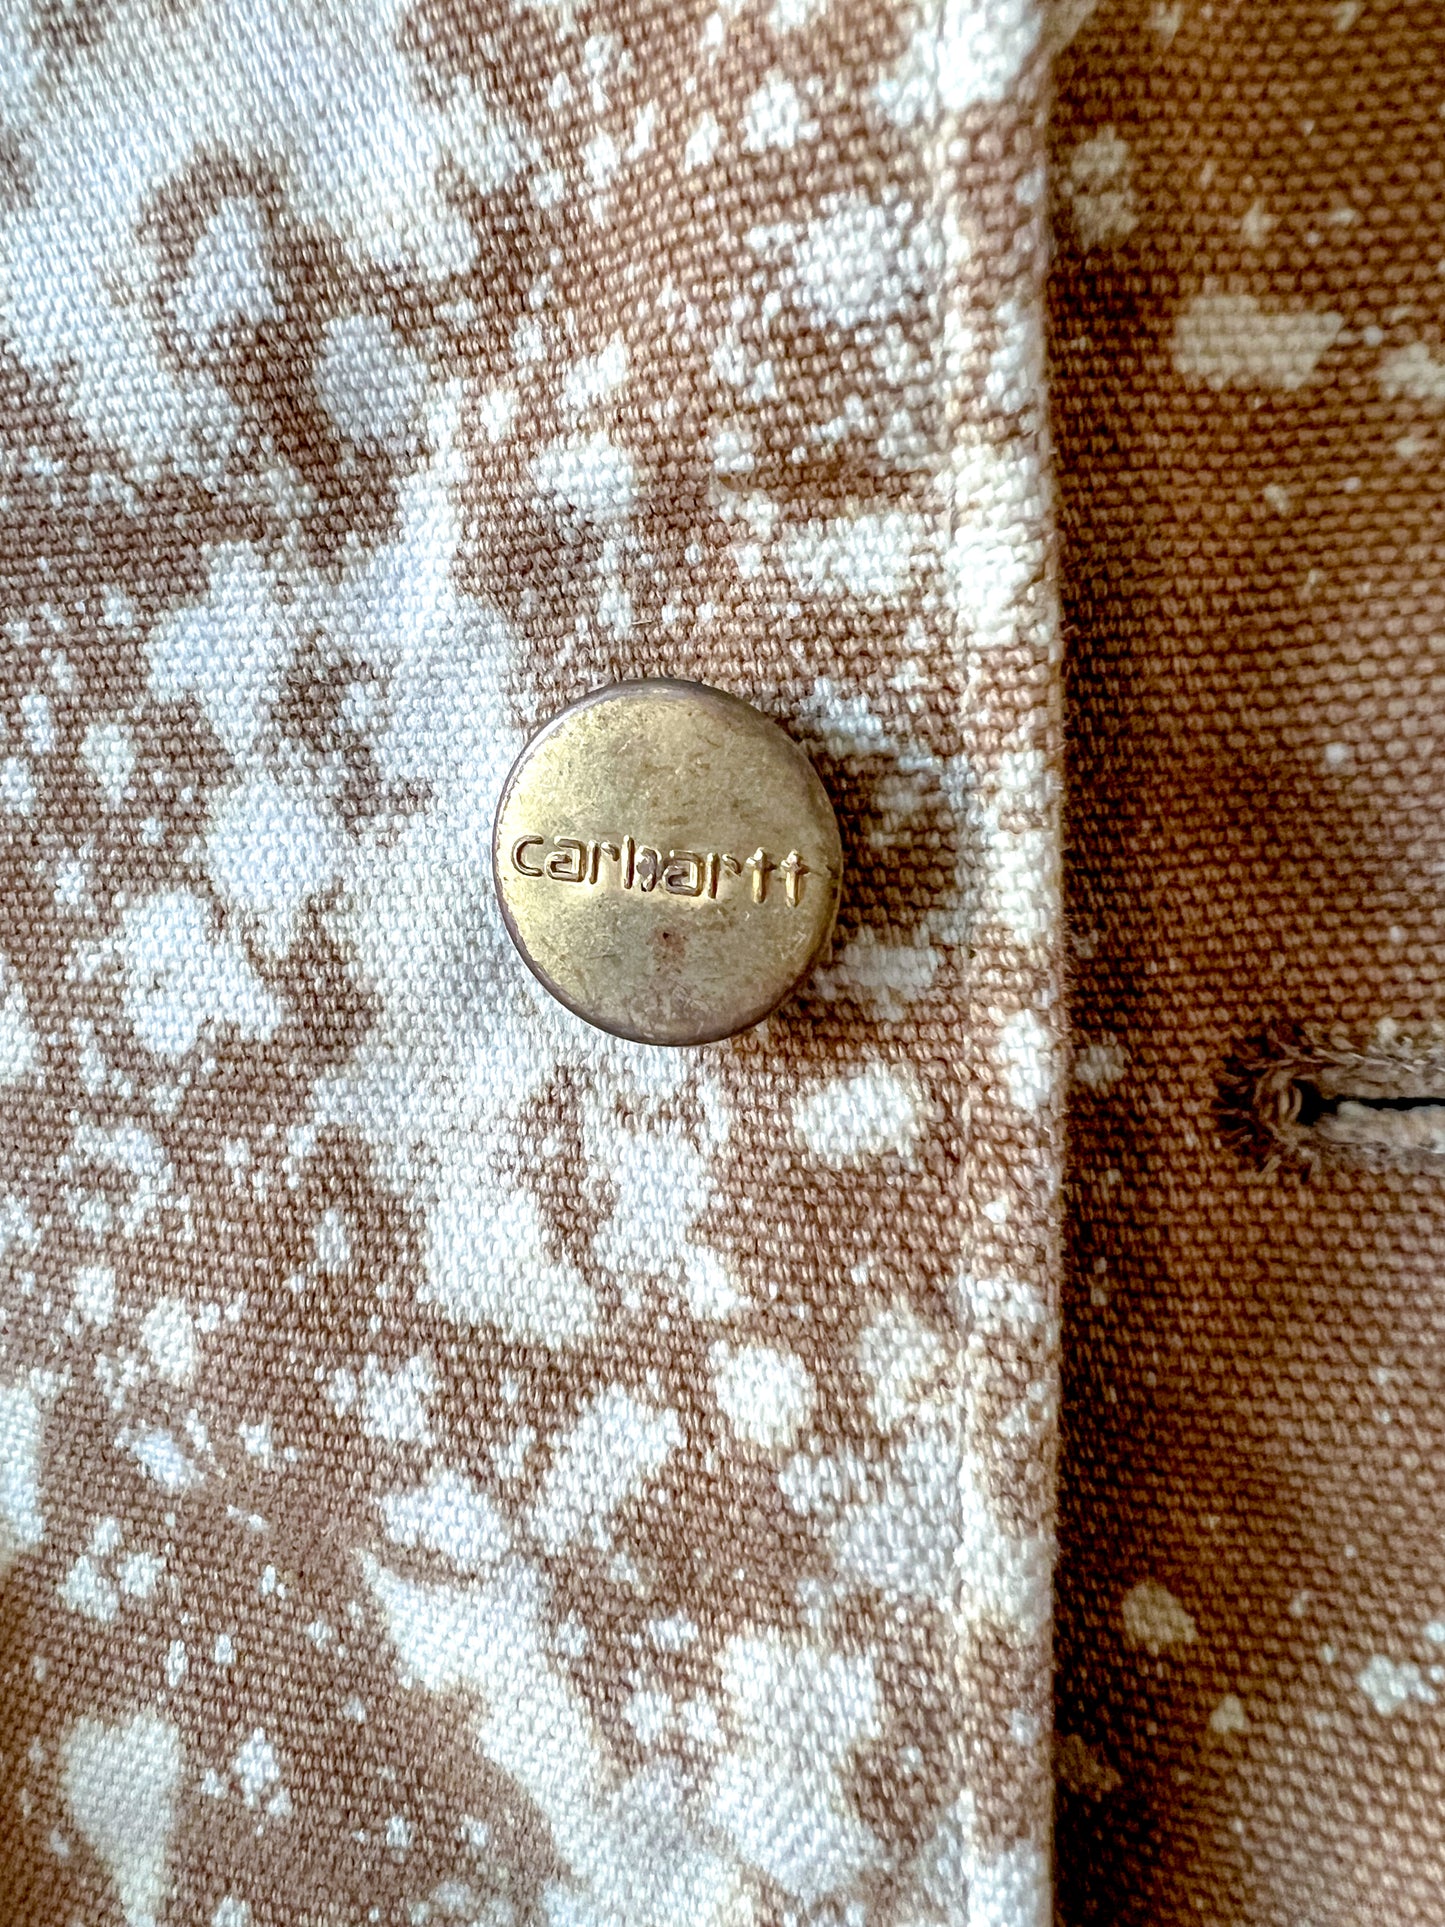 NEW JERSEY - Vintage 90s Carhartt Acid Washed Blanket Lined Chore Coat - Tan, Beige - Unisex Small/Medium